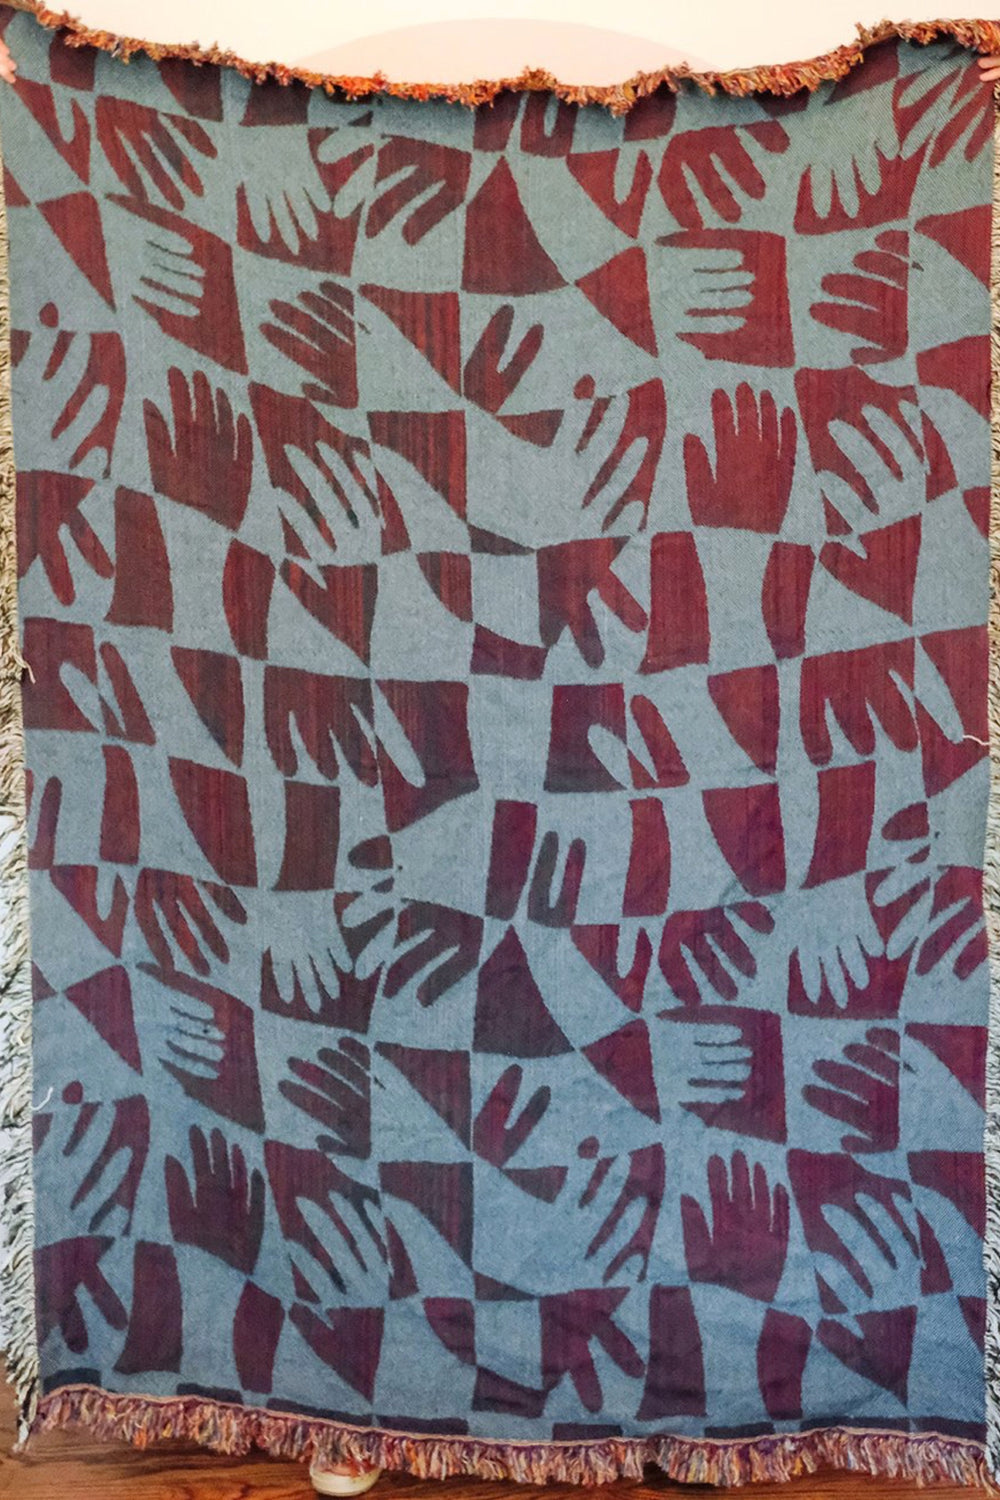 Hand Print Blanket